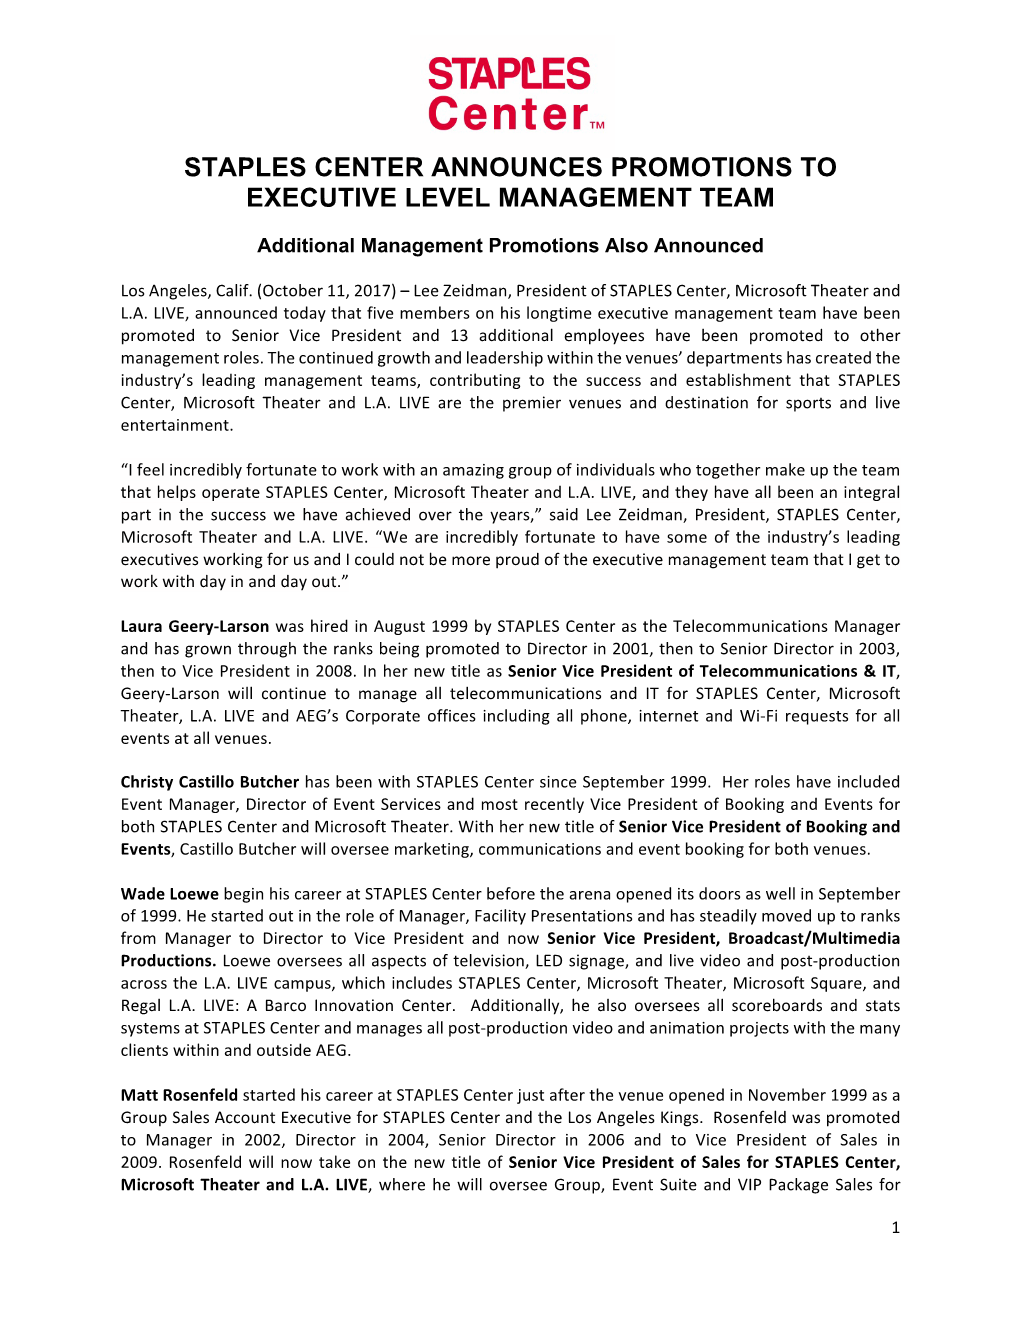 Staples Center Announces Promotions to Executive Level Management Team